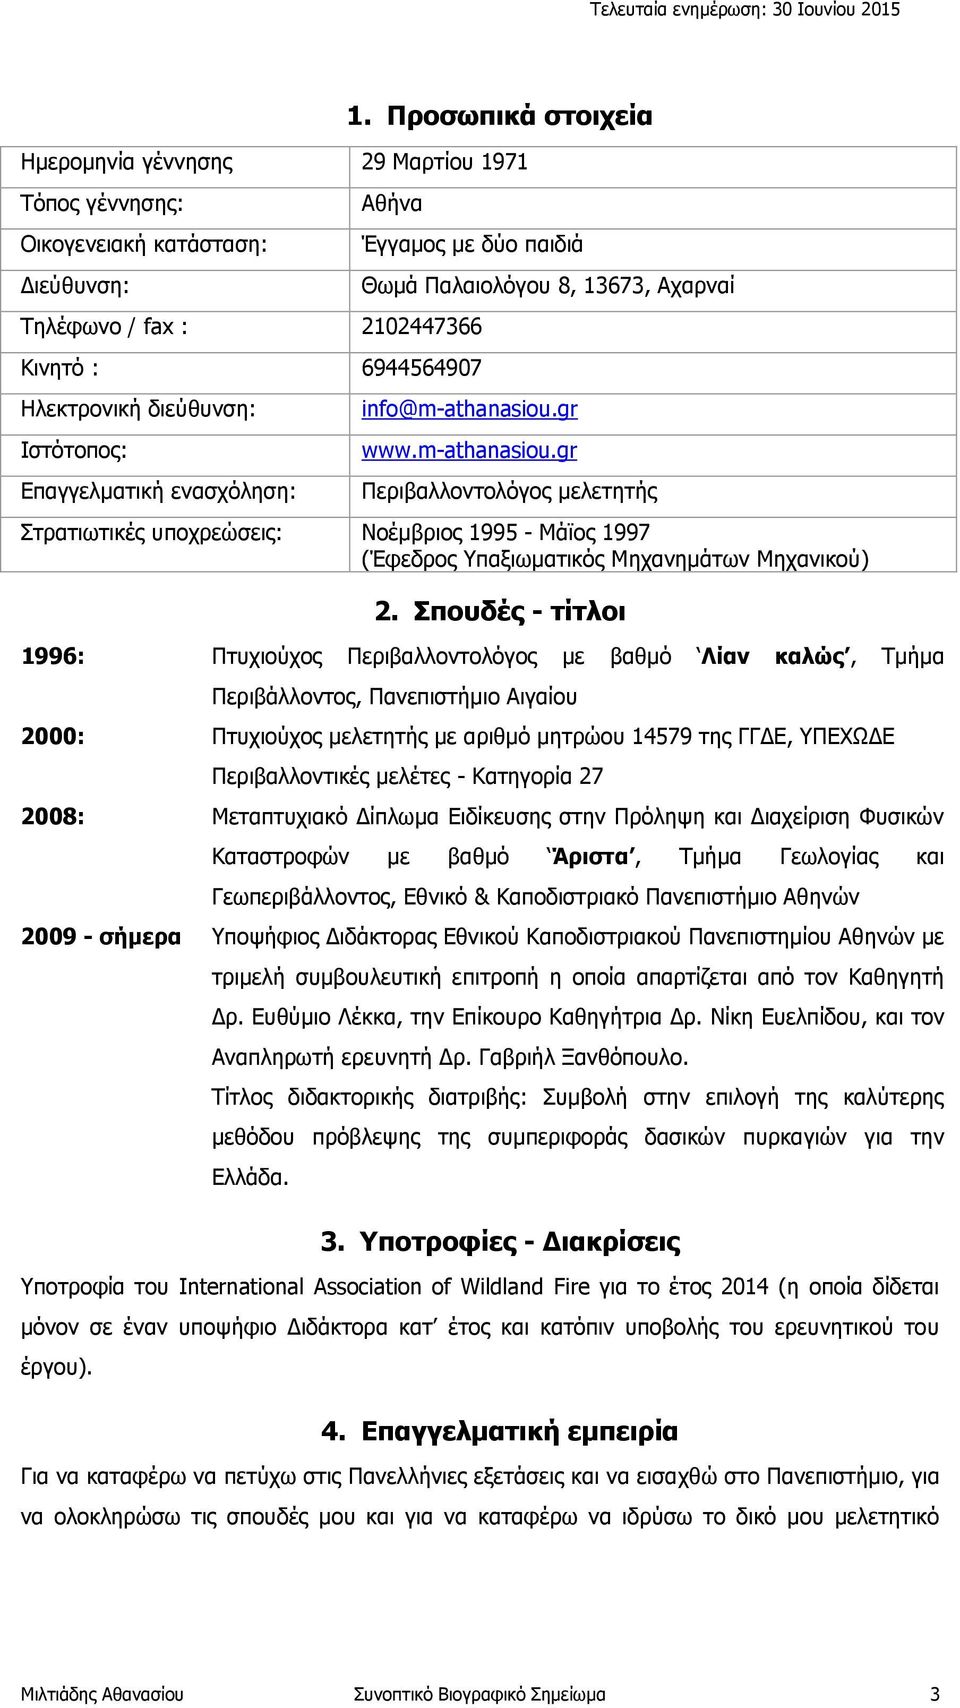 gr www.m-athanasiou.gr Περιβαλλοντολόγος μελετητής Στρατιωτικές υποχρεώσεις: Νοέμβριος 1995 - Μάϊος 1997 (Έφεδρος Υπαξιωματικός Μηχανημάτων Μηχανικού) 2.